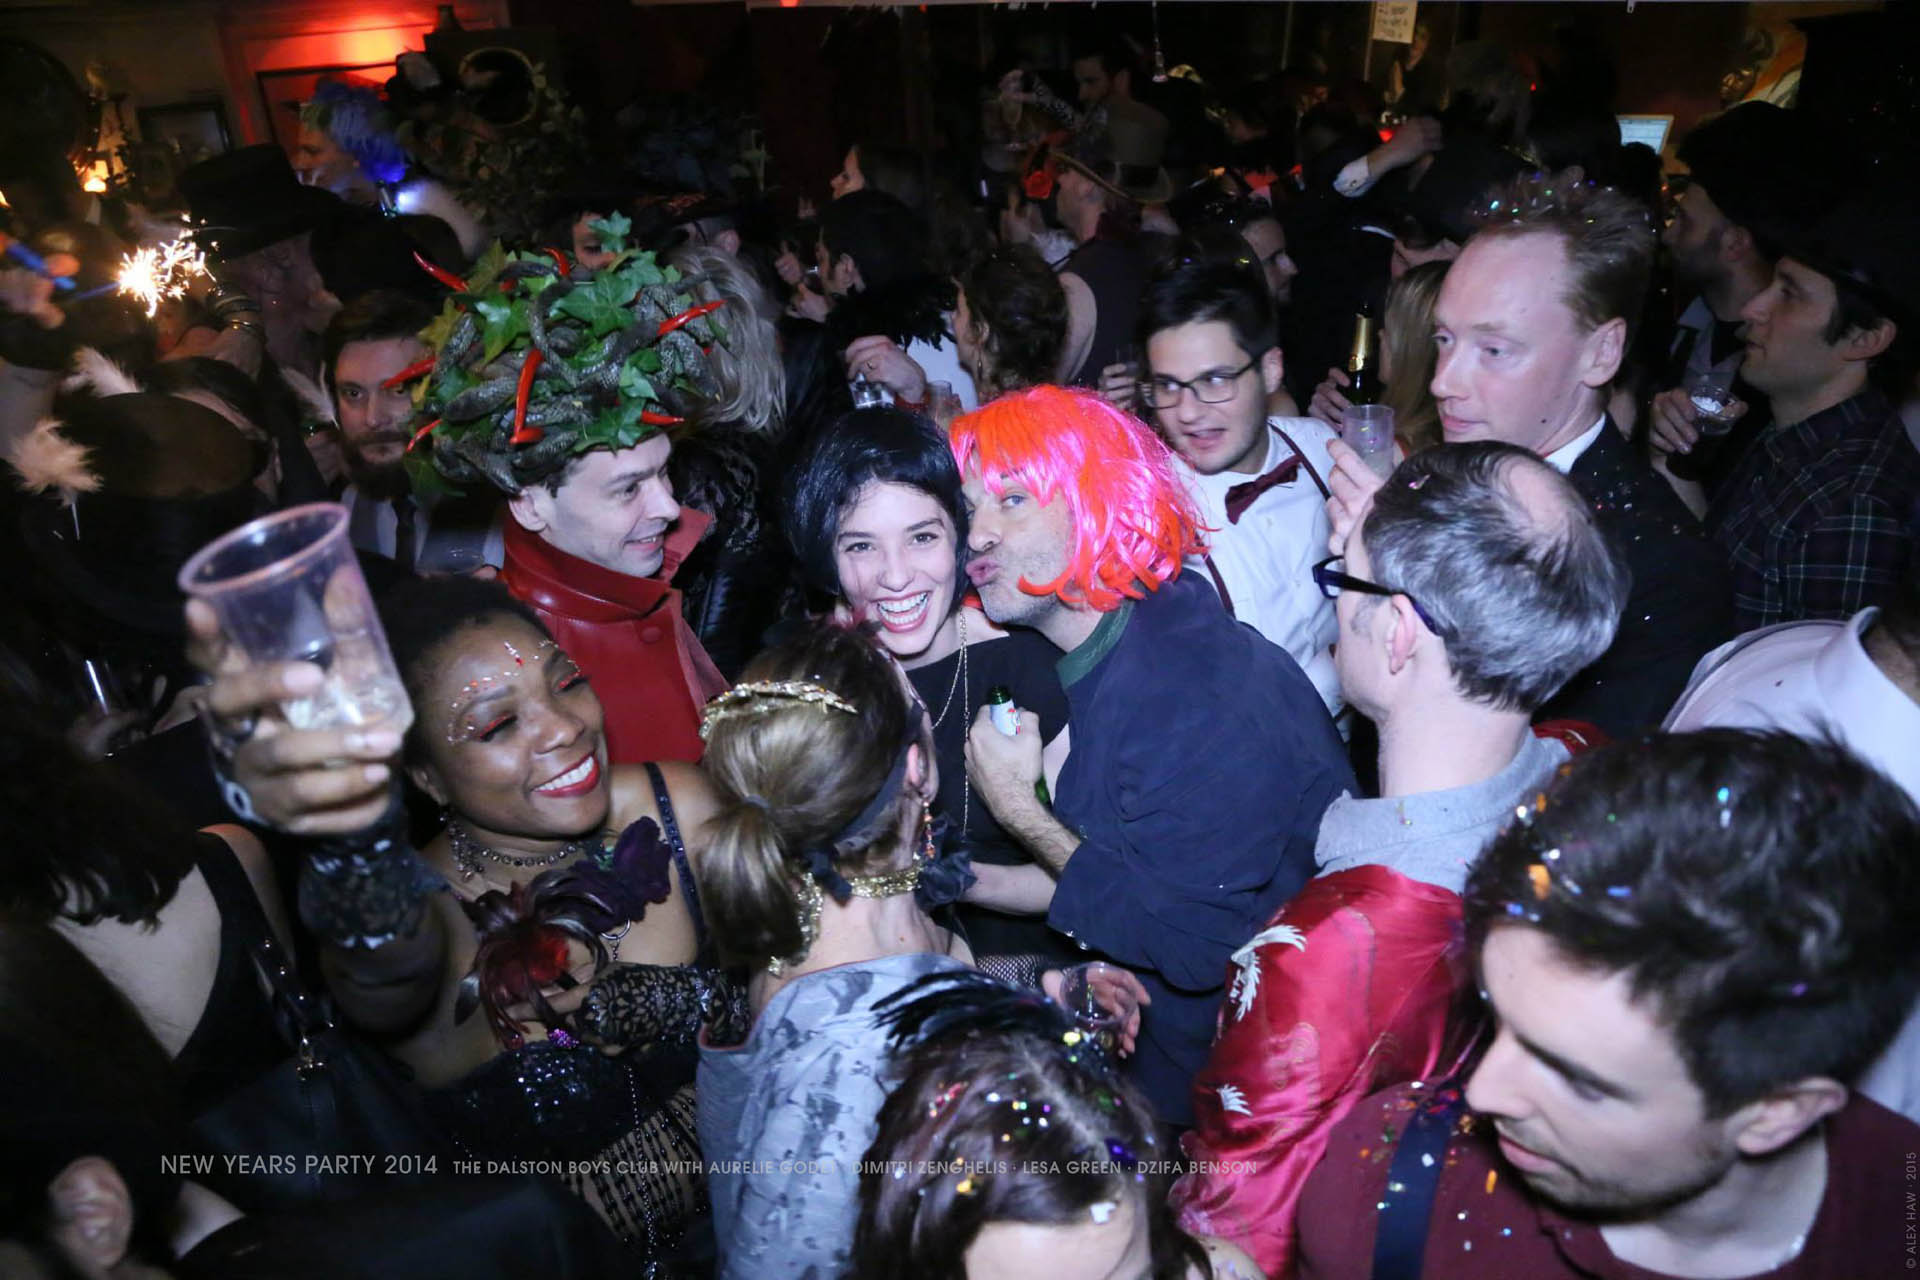 New Years Party 2014, The Dalston Boys Club, with Aurelie Godet, Dimitri Zenghelis, Lesa Green, Dzifa Benson, Gorgon headpiece